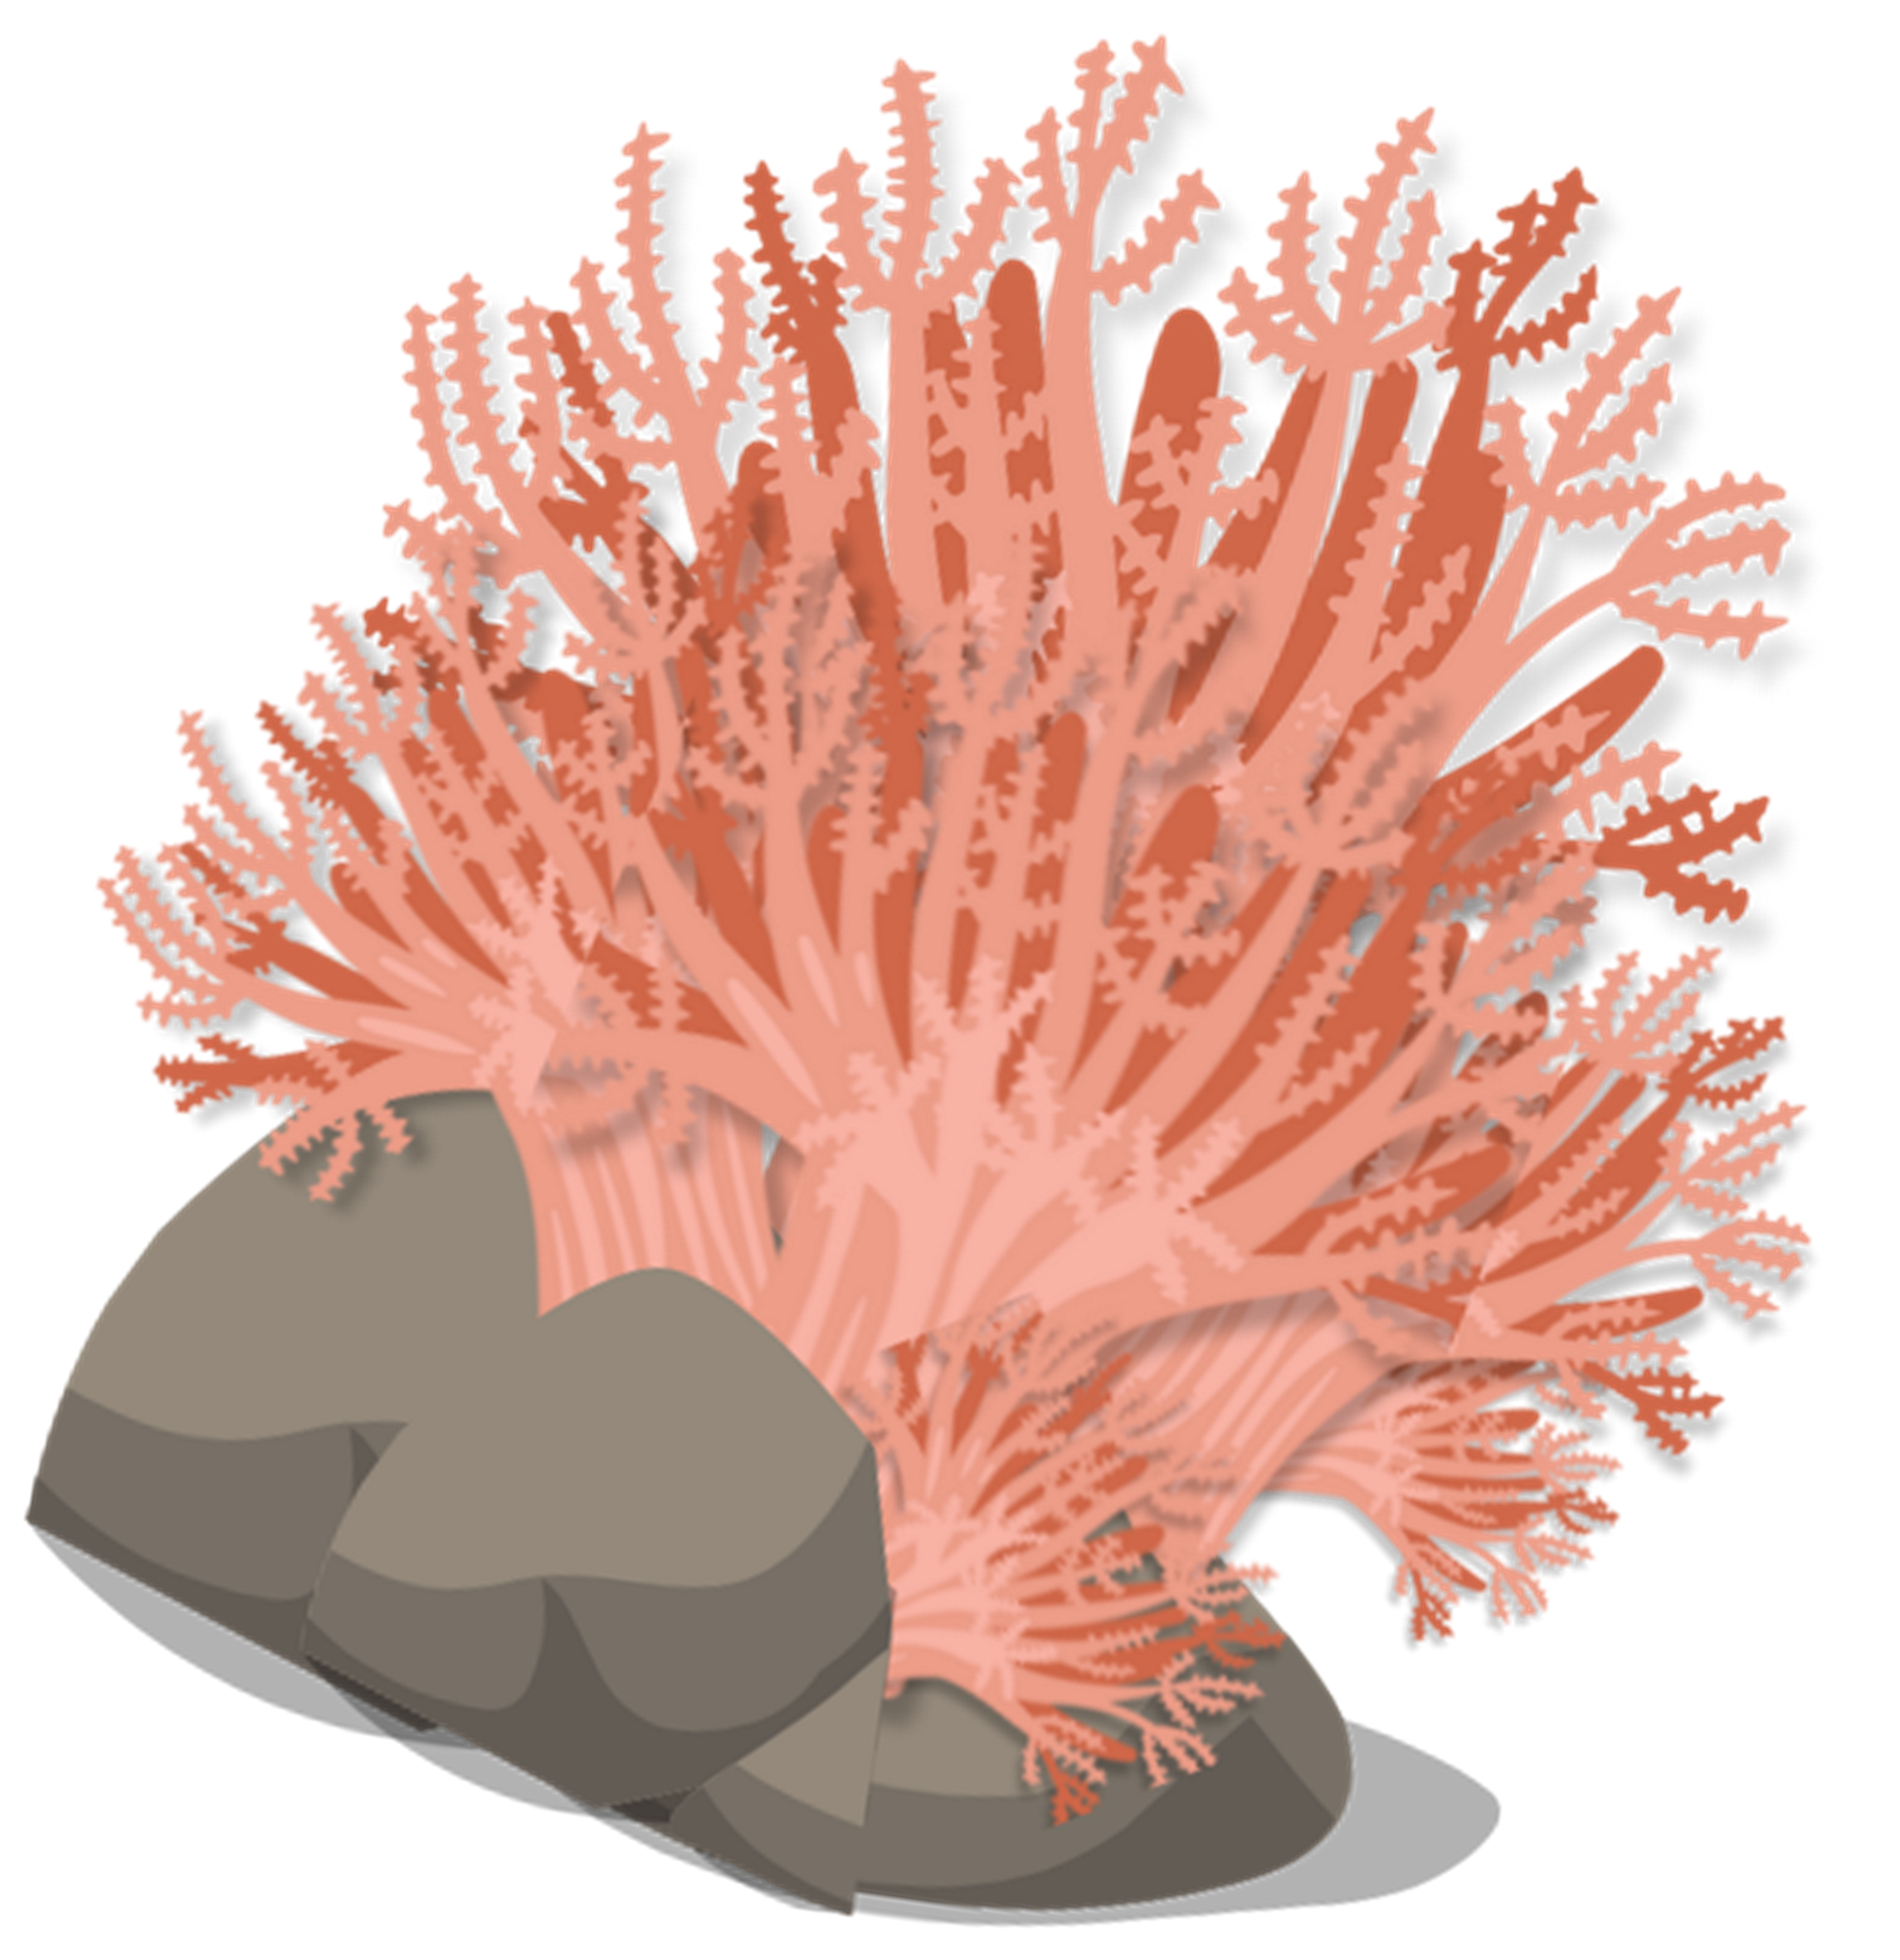 An artistic interpretation of the invasive pulse corals